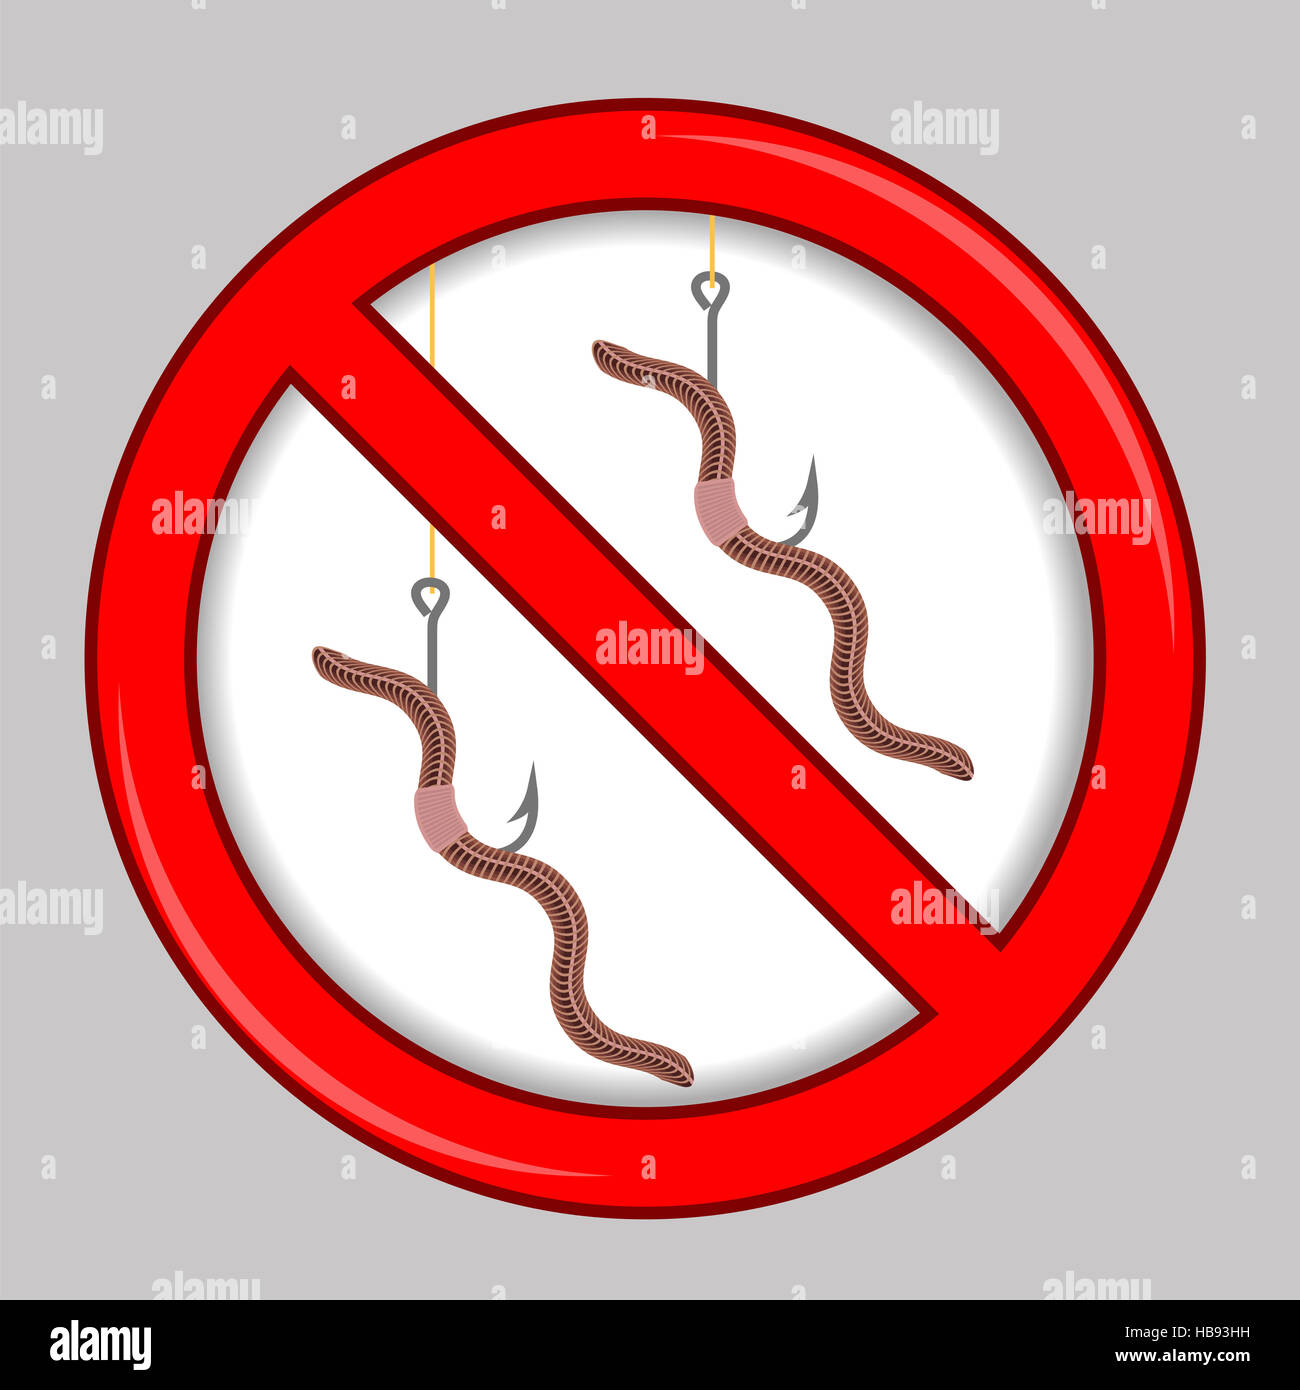 No Fishing Prohibited Sign Stock Photo